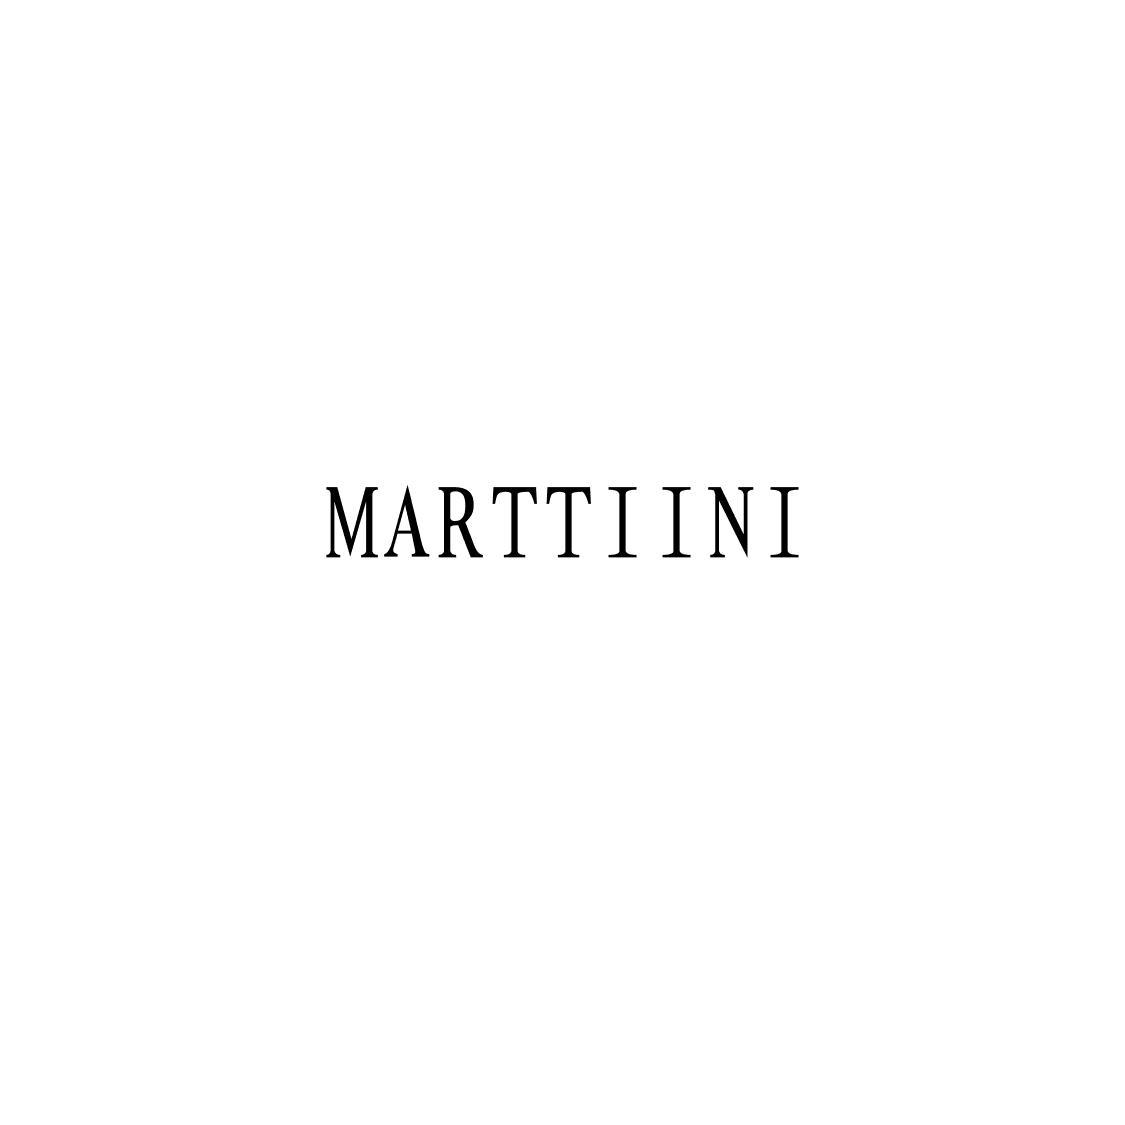 MARTTIINI